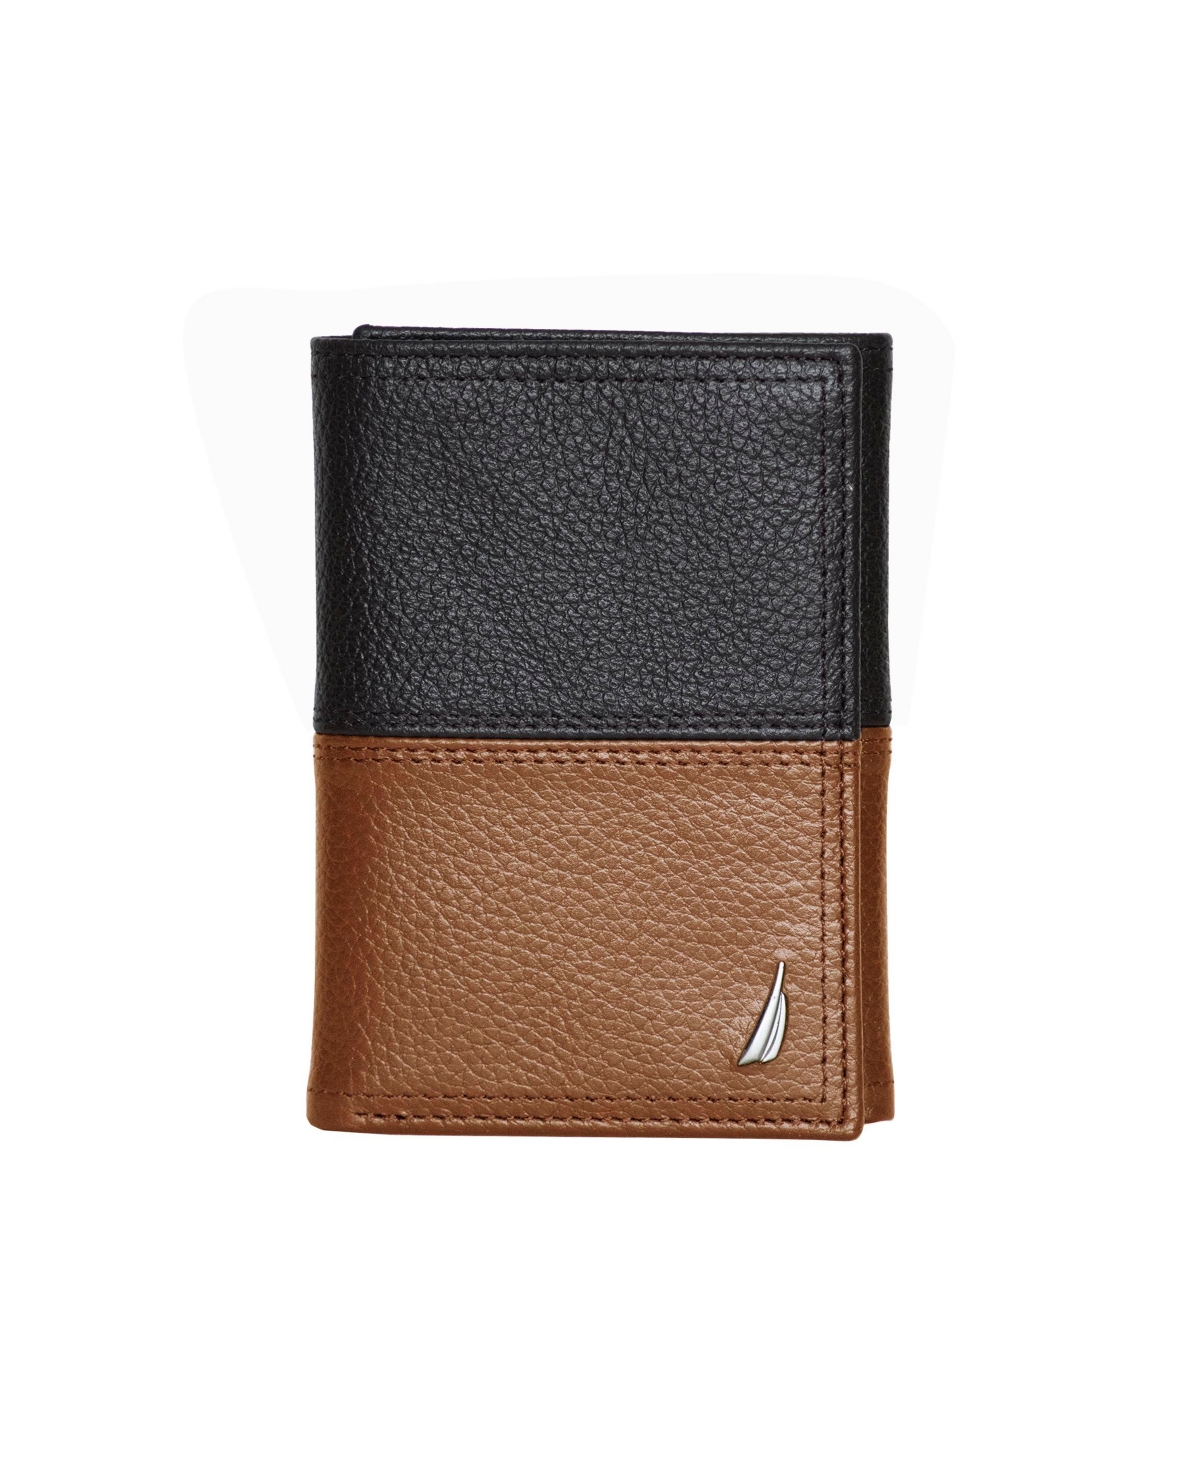 Nautica Men's Trifold Leather Wallet In Cognac